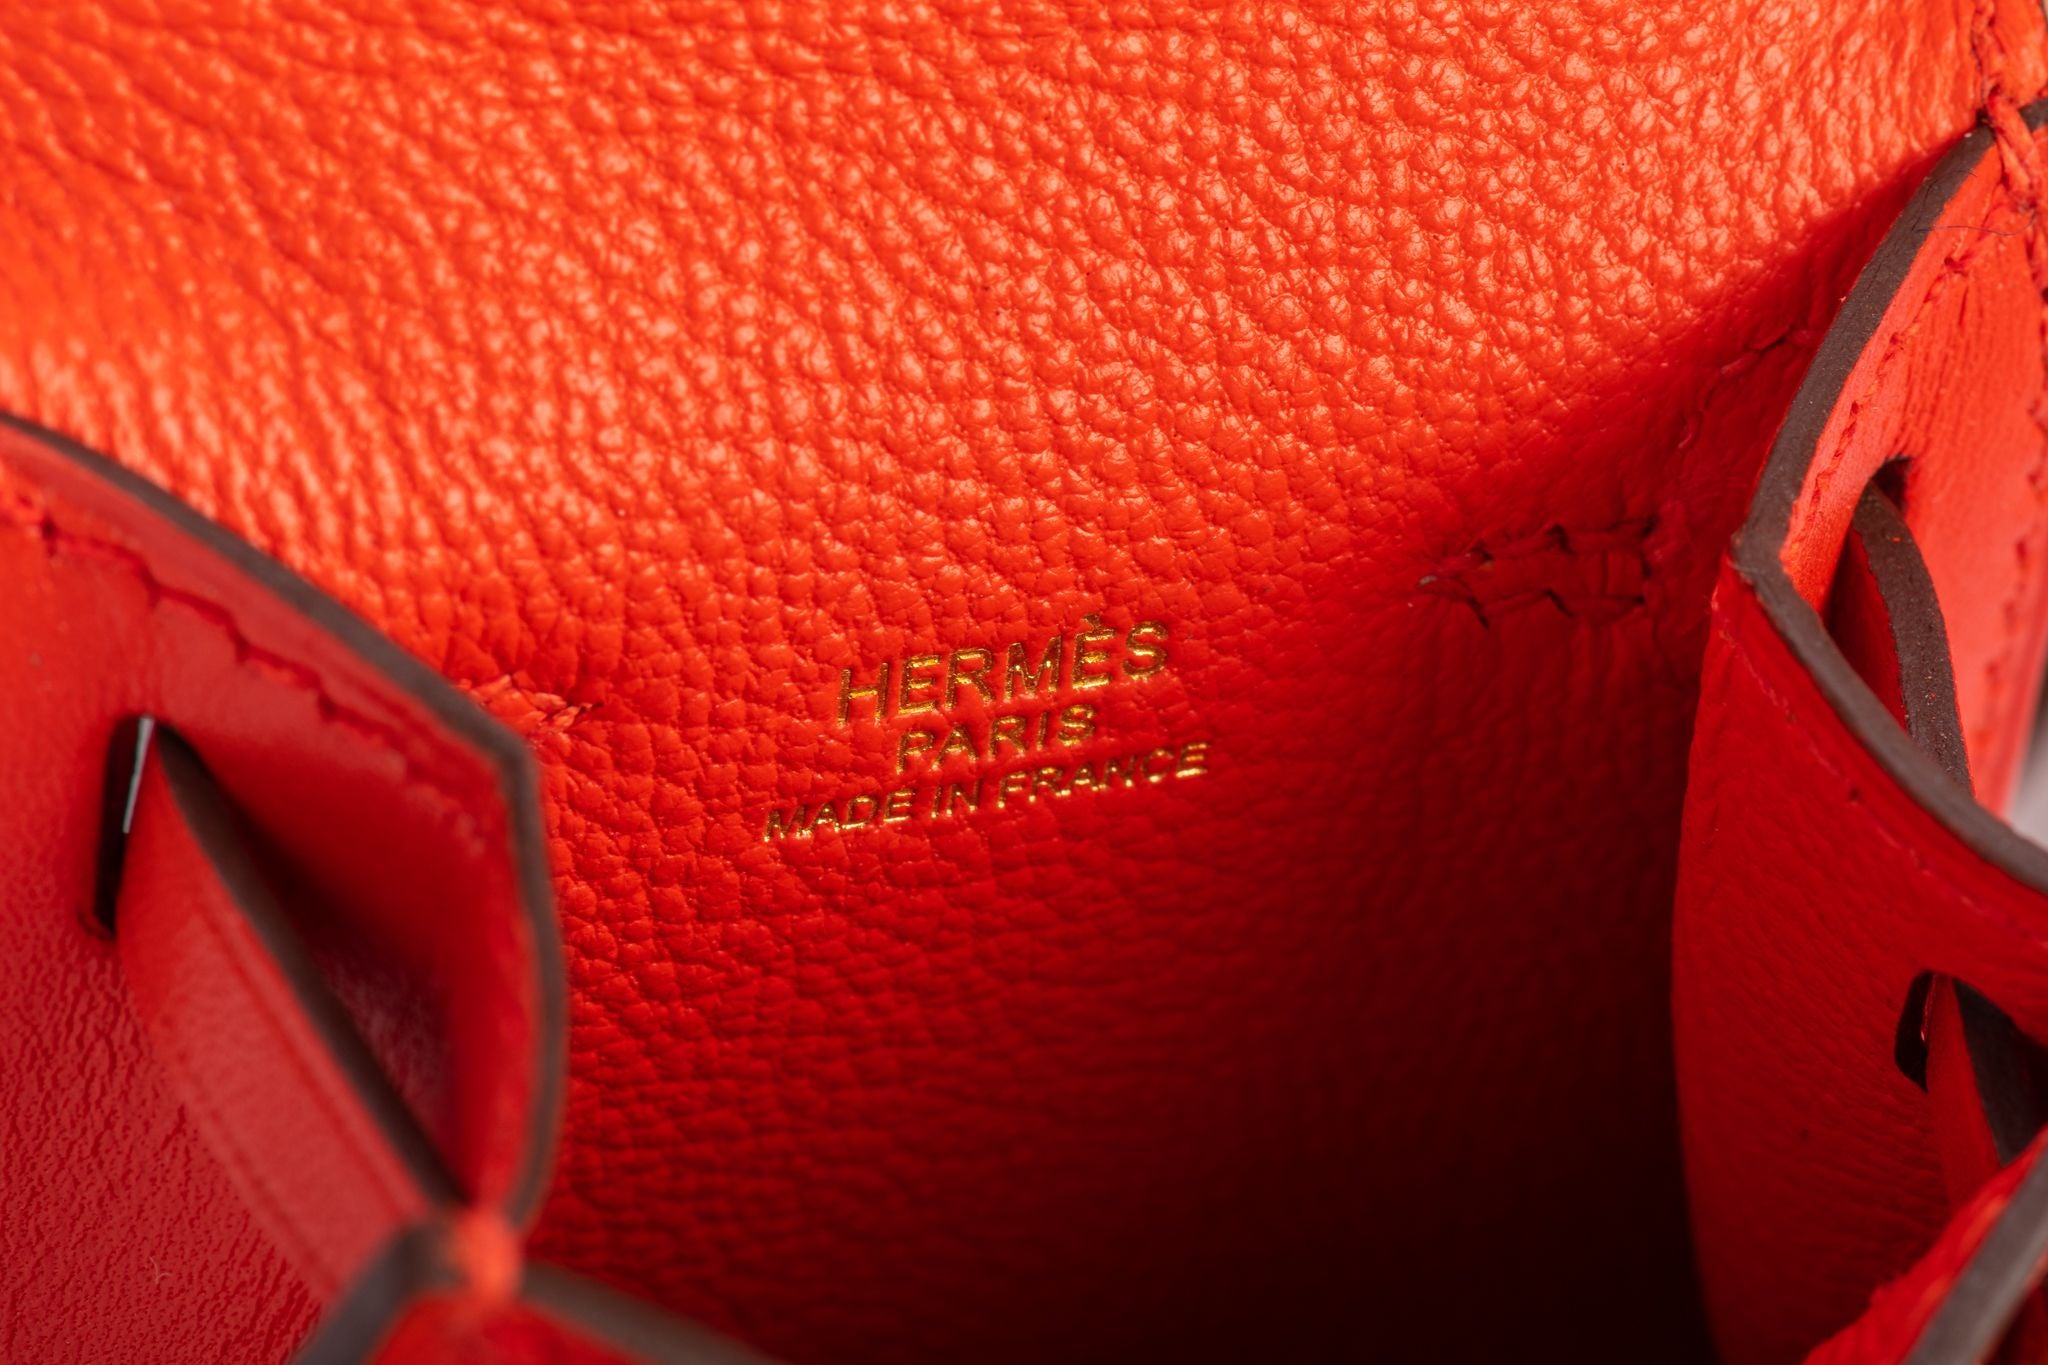 Hermès Micro Kelly Quelle Idole Bag Charm Rose Sakura, Sanguine, Nata